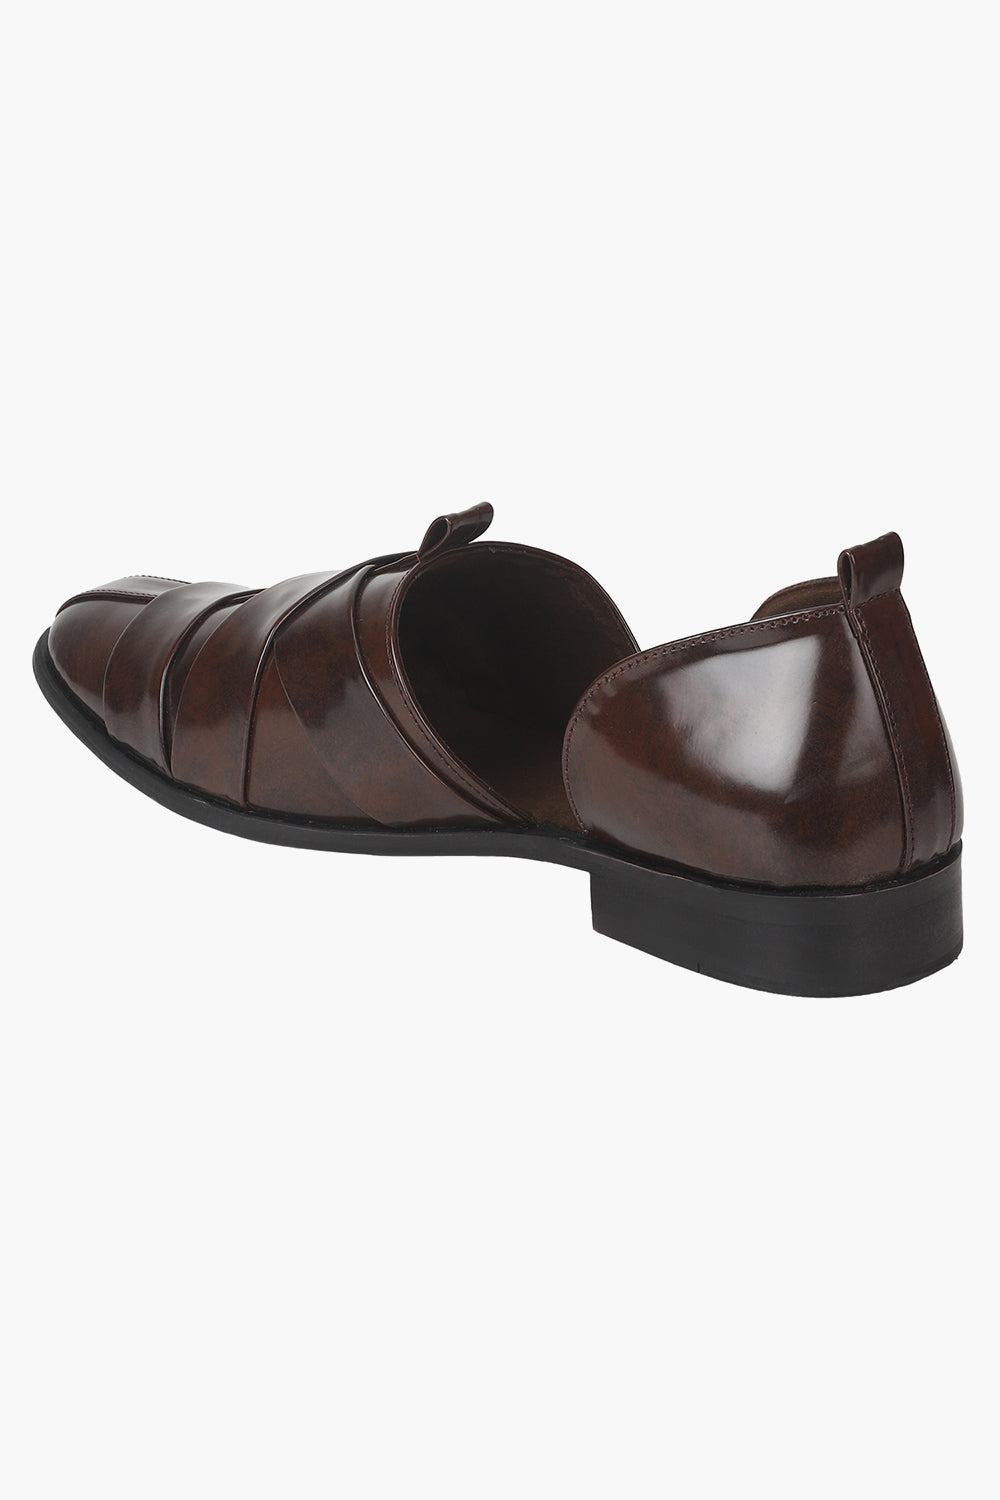 Gianni Bini Maileigh Leather Square Toe Ankle Strap Block Heel Dress Sandals  | Dillard's | Dress and heels, Ankle strap block heel, Dress sandals